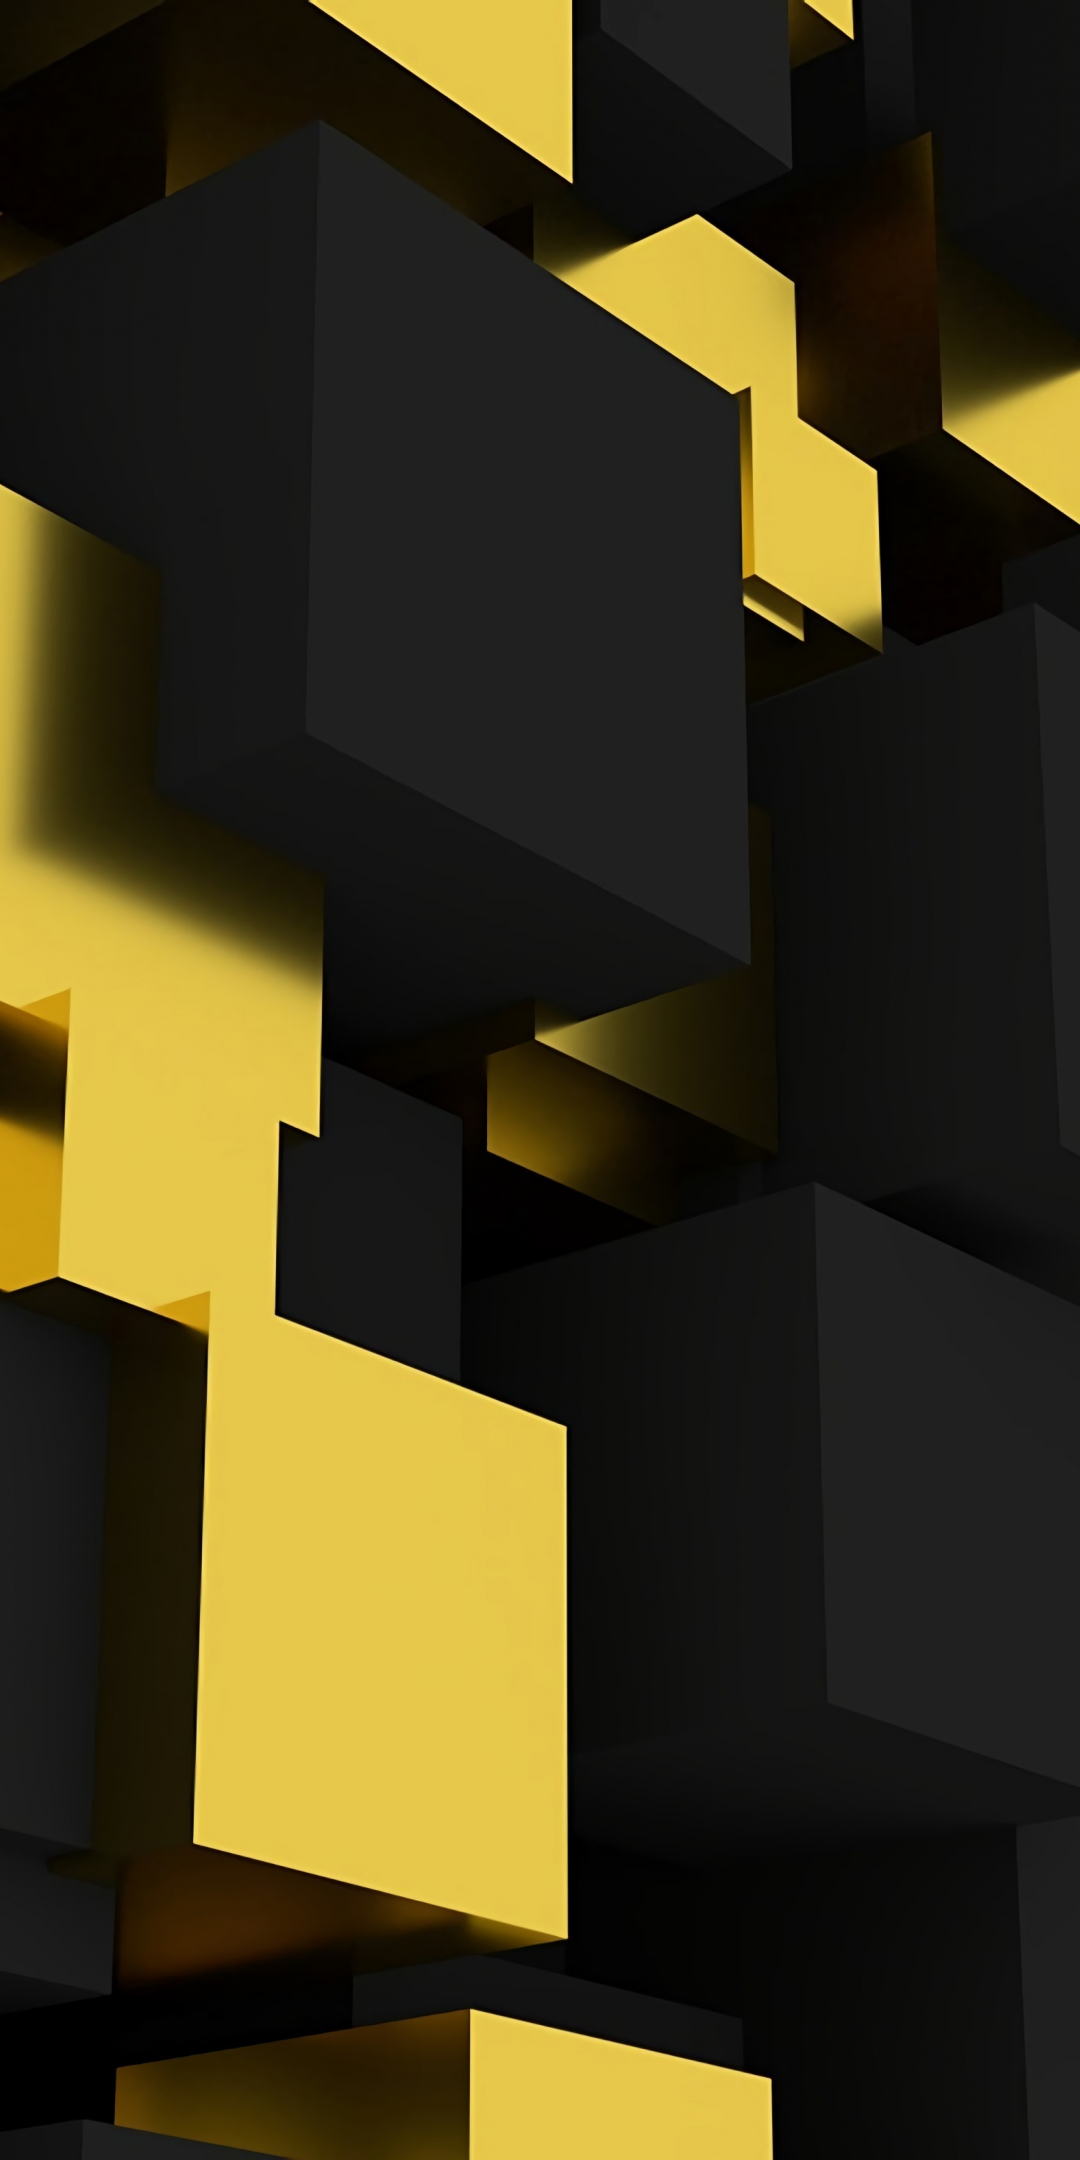 Cubical pattern, figure, yellow-black squares, 1080x2160 wallpaper